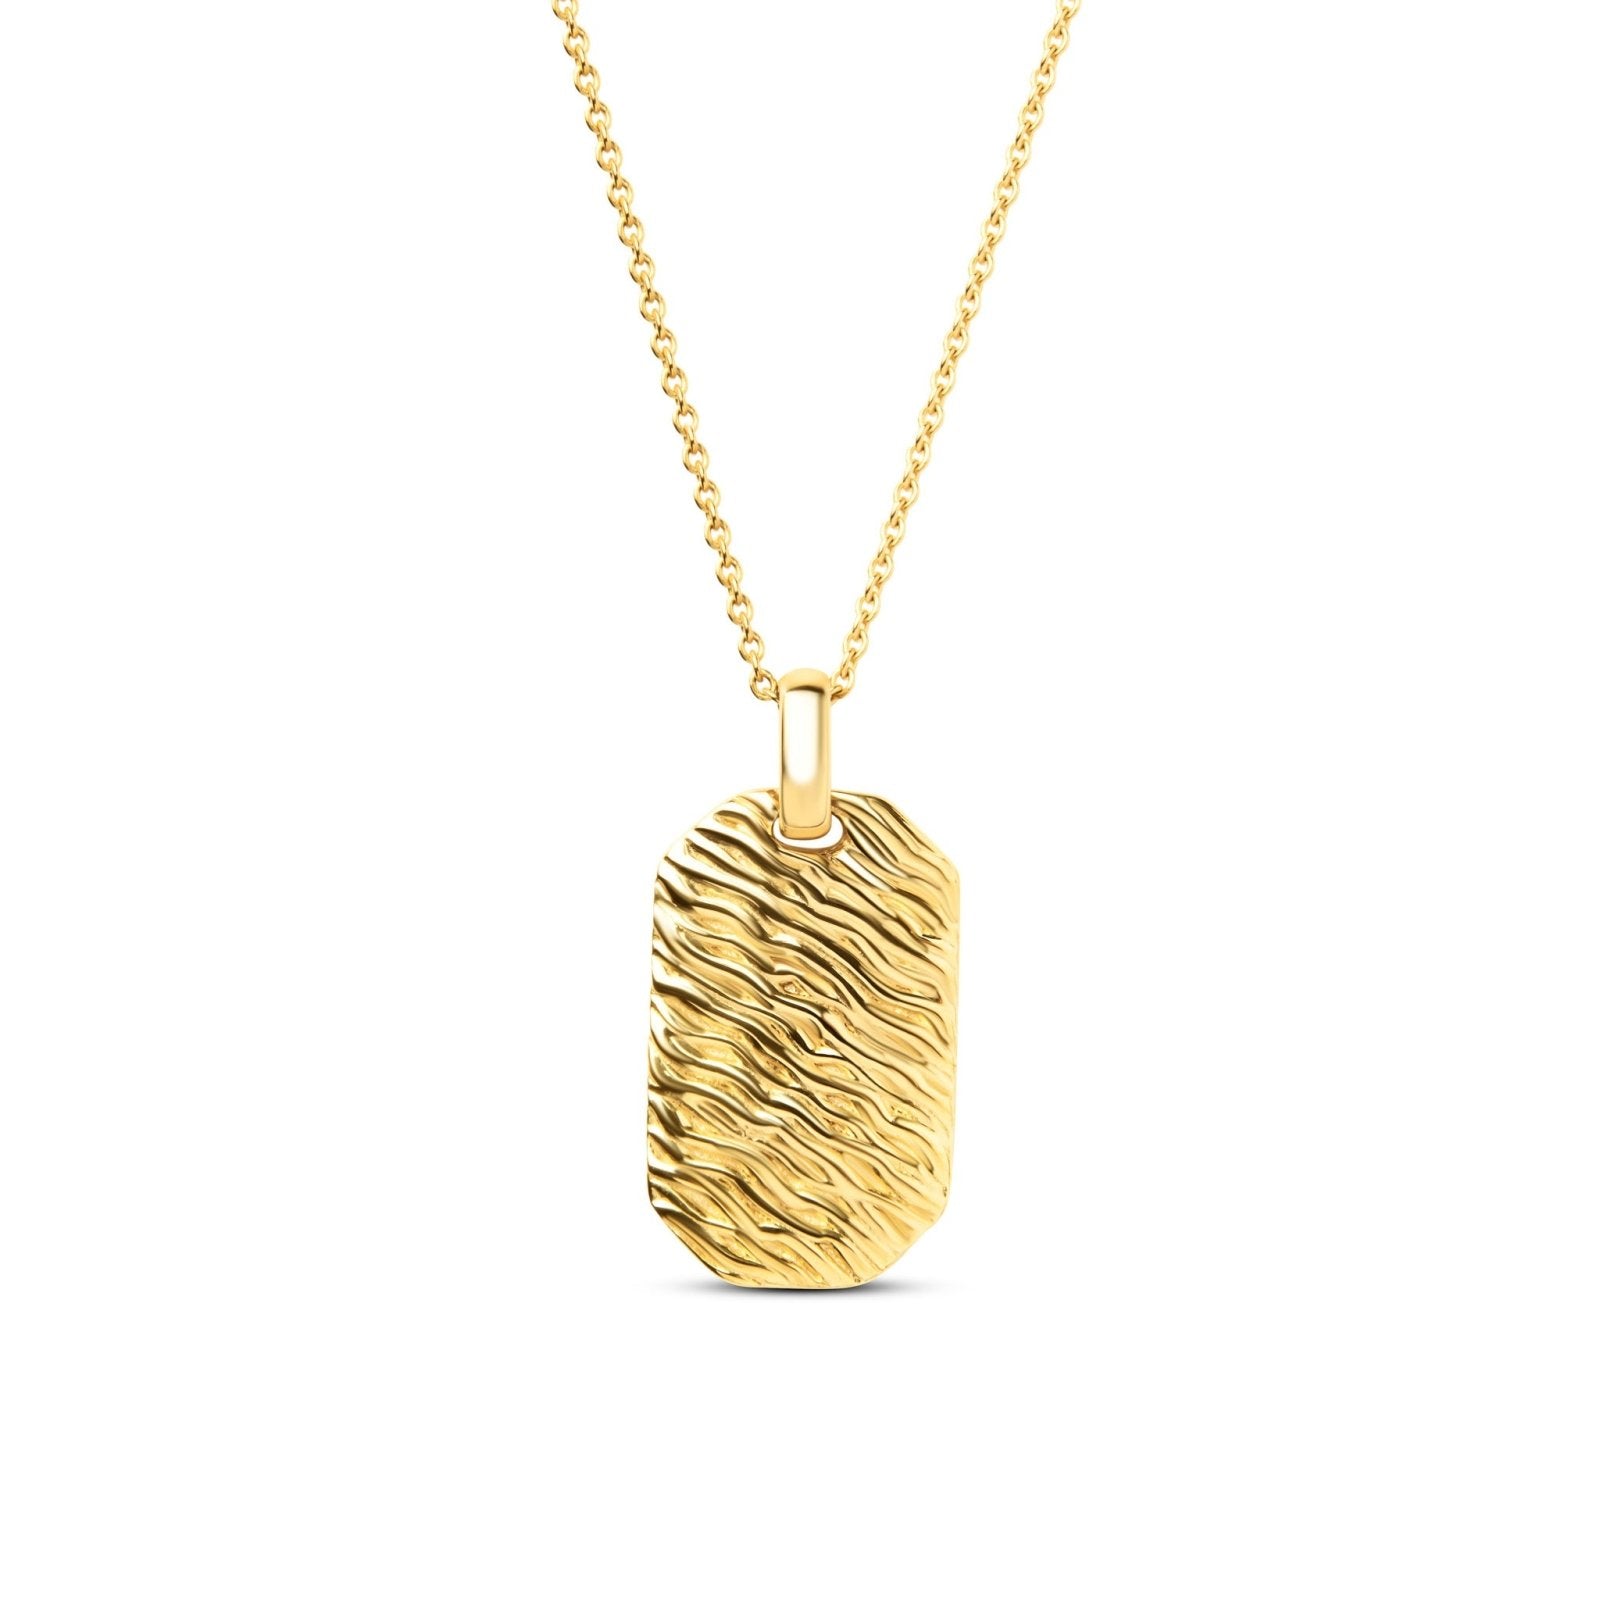 Irle Gold Vermeil Necklace - Honoura